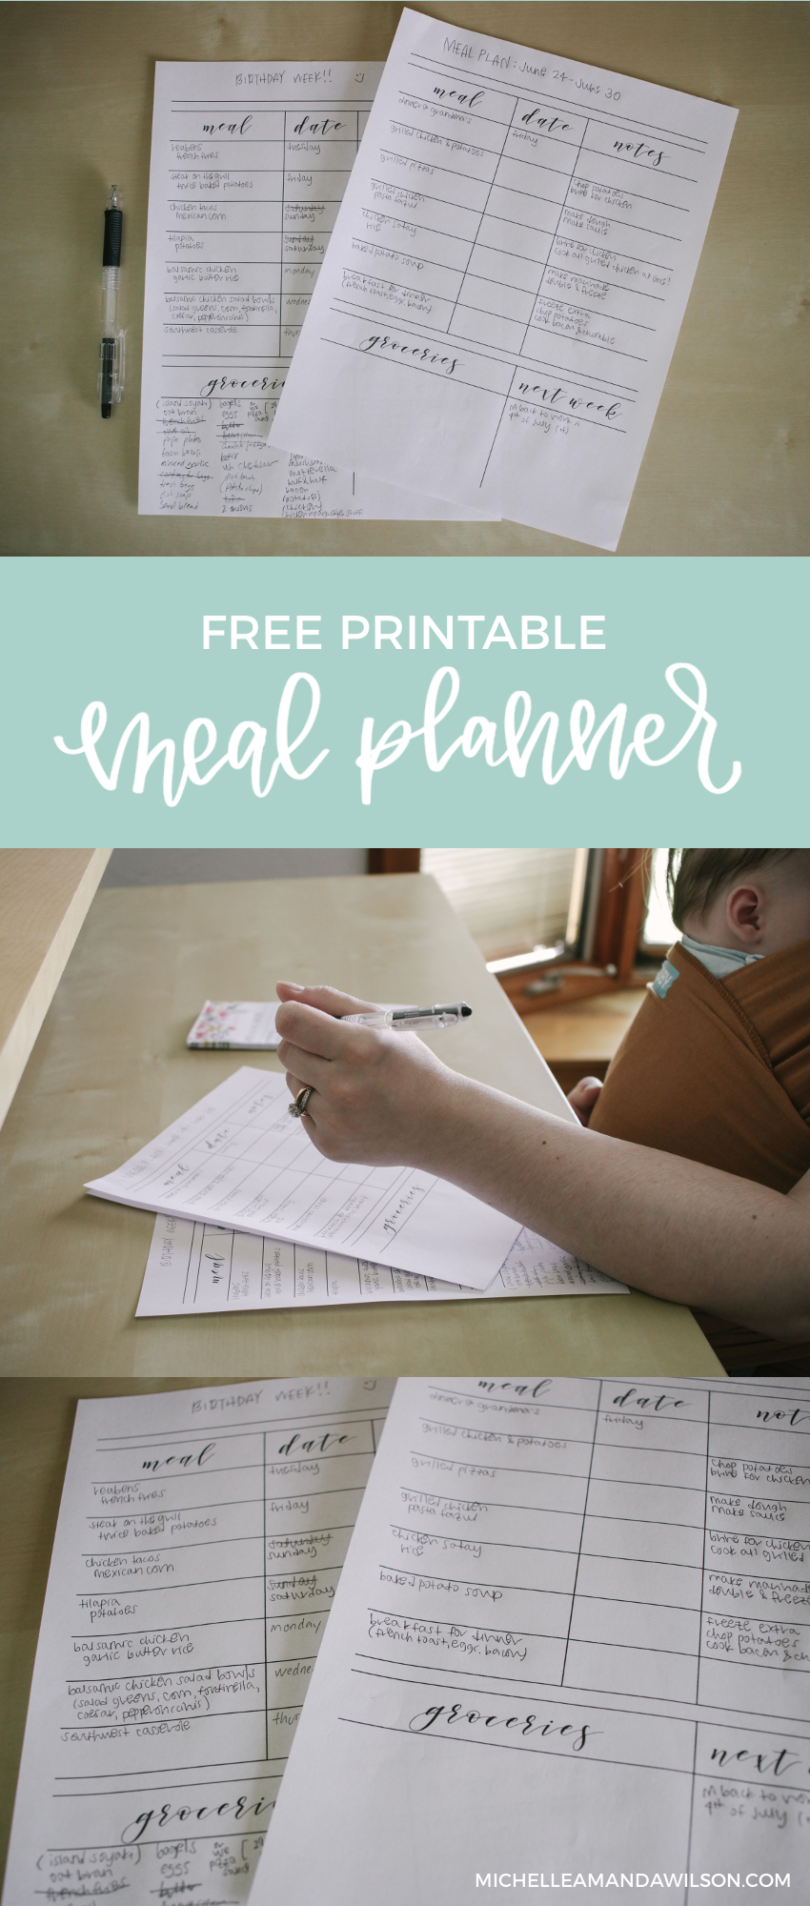 Free Printable Meal Planner | Michelle Amanda Wilson